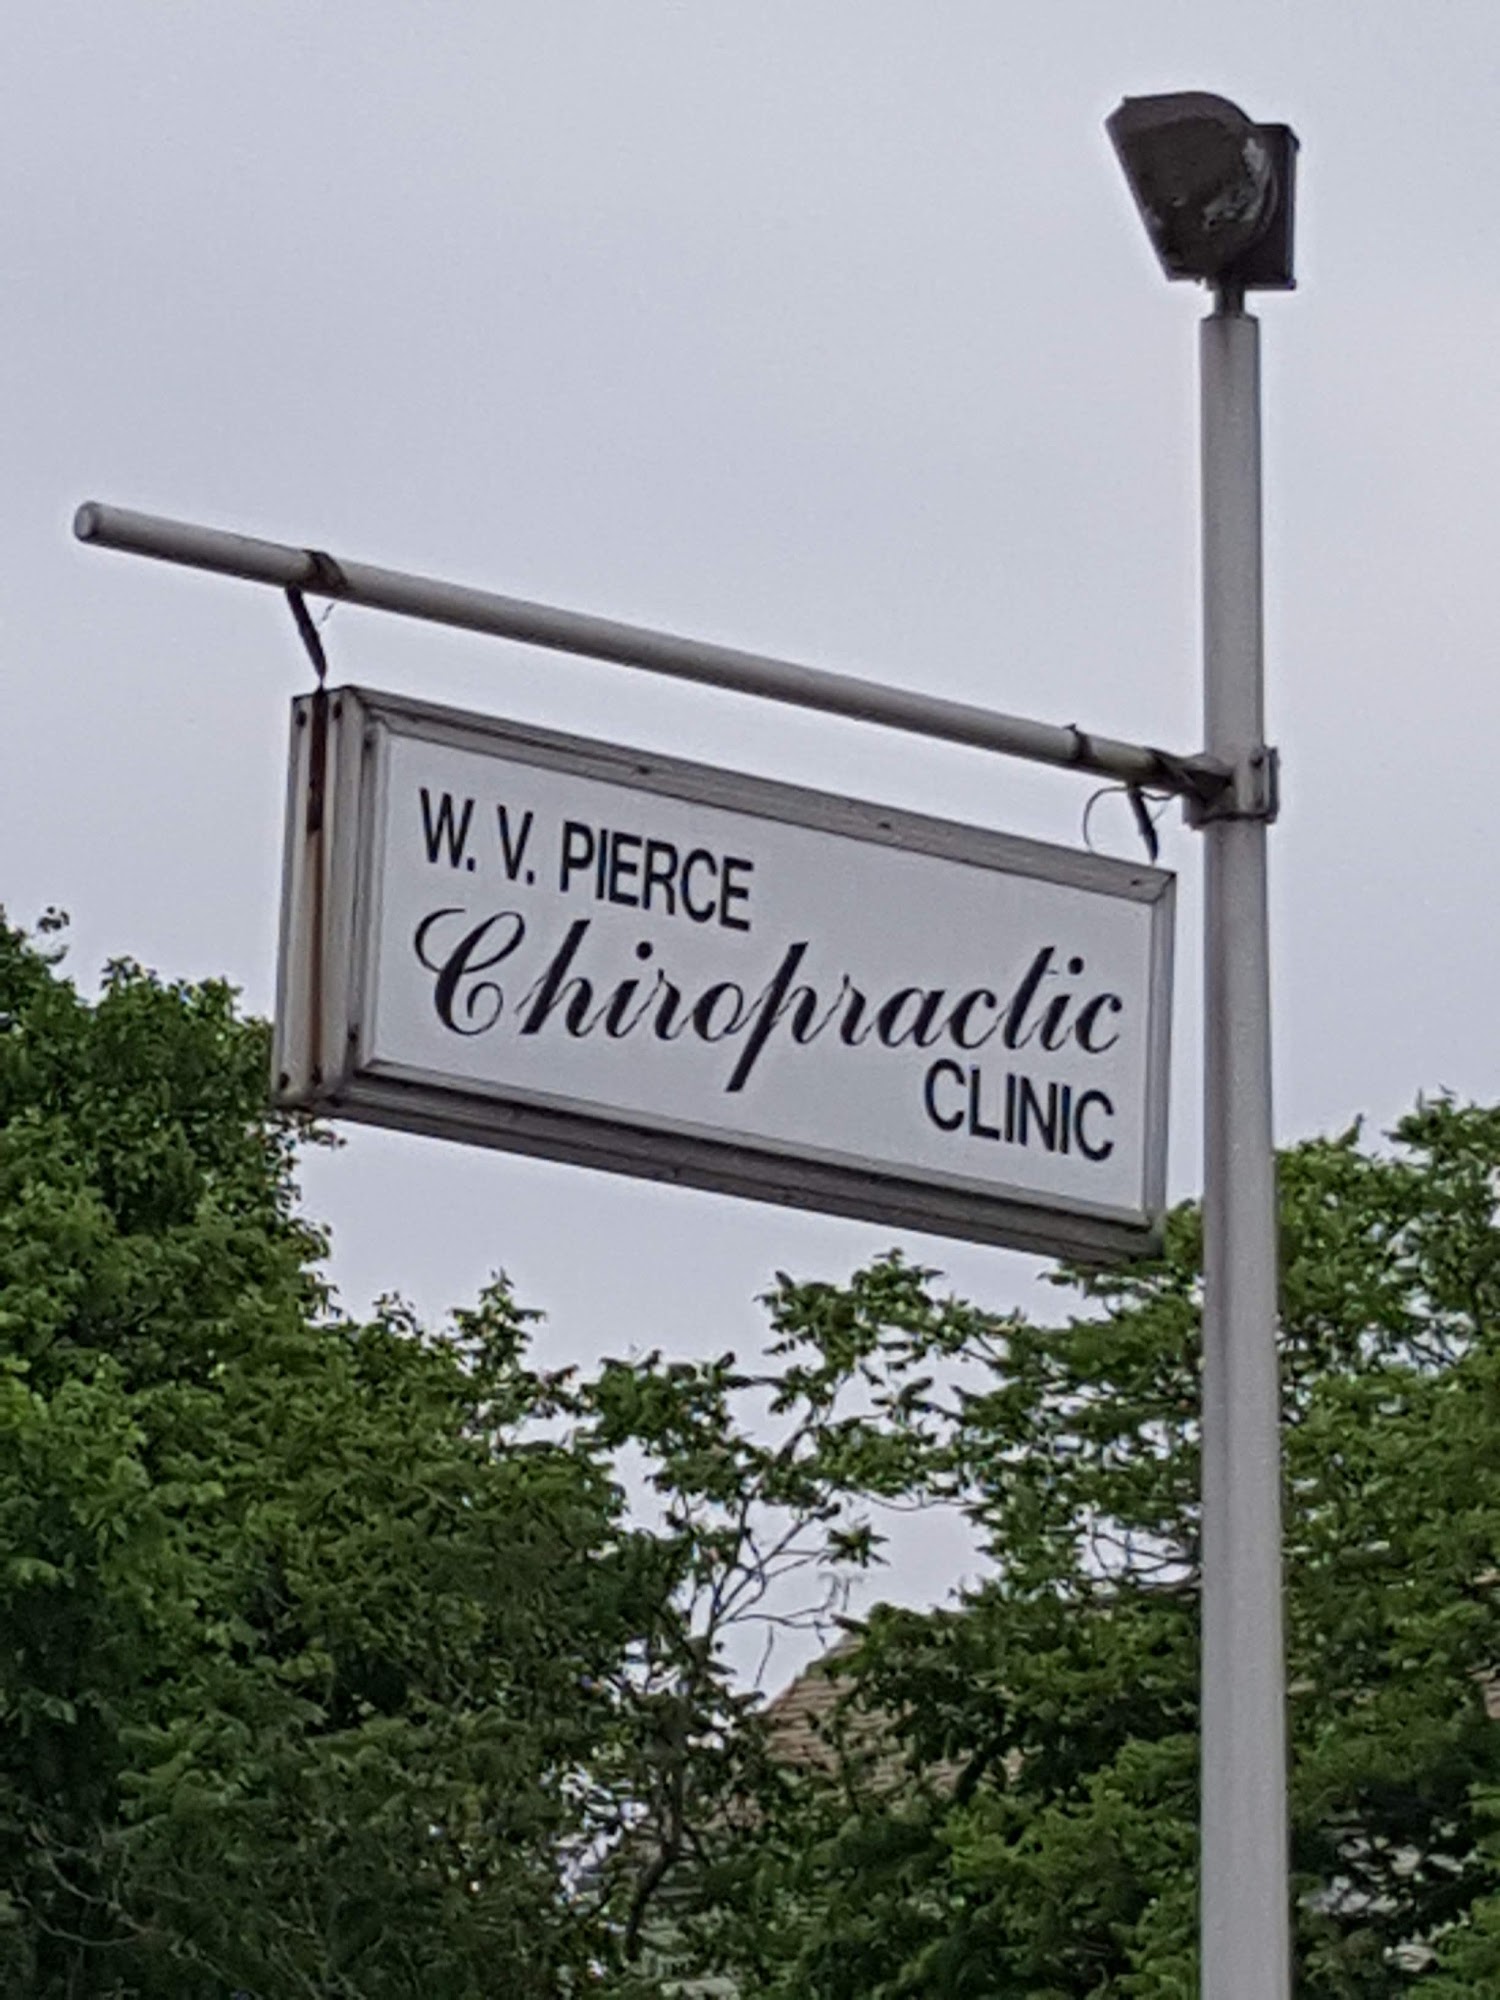 Pierce Chiropractic Clinic 209 Richland Ave # 1, Dravosburg Pennsylvania 15034